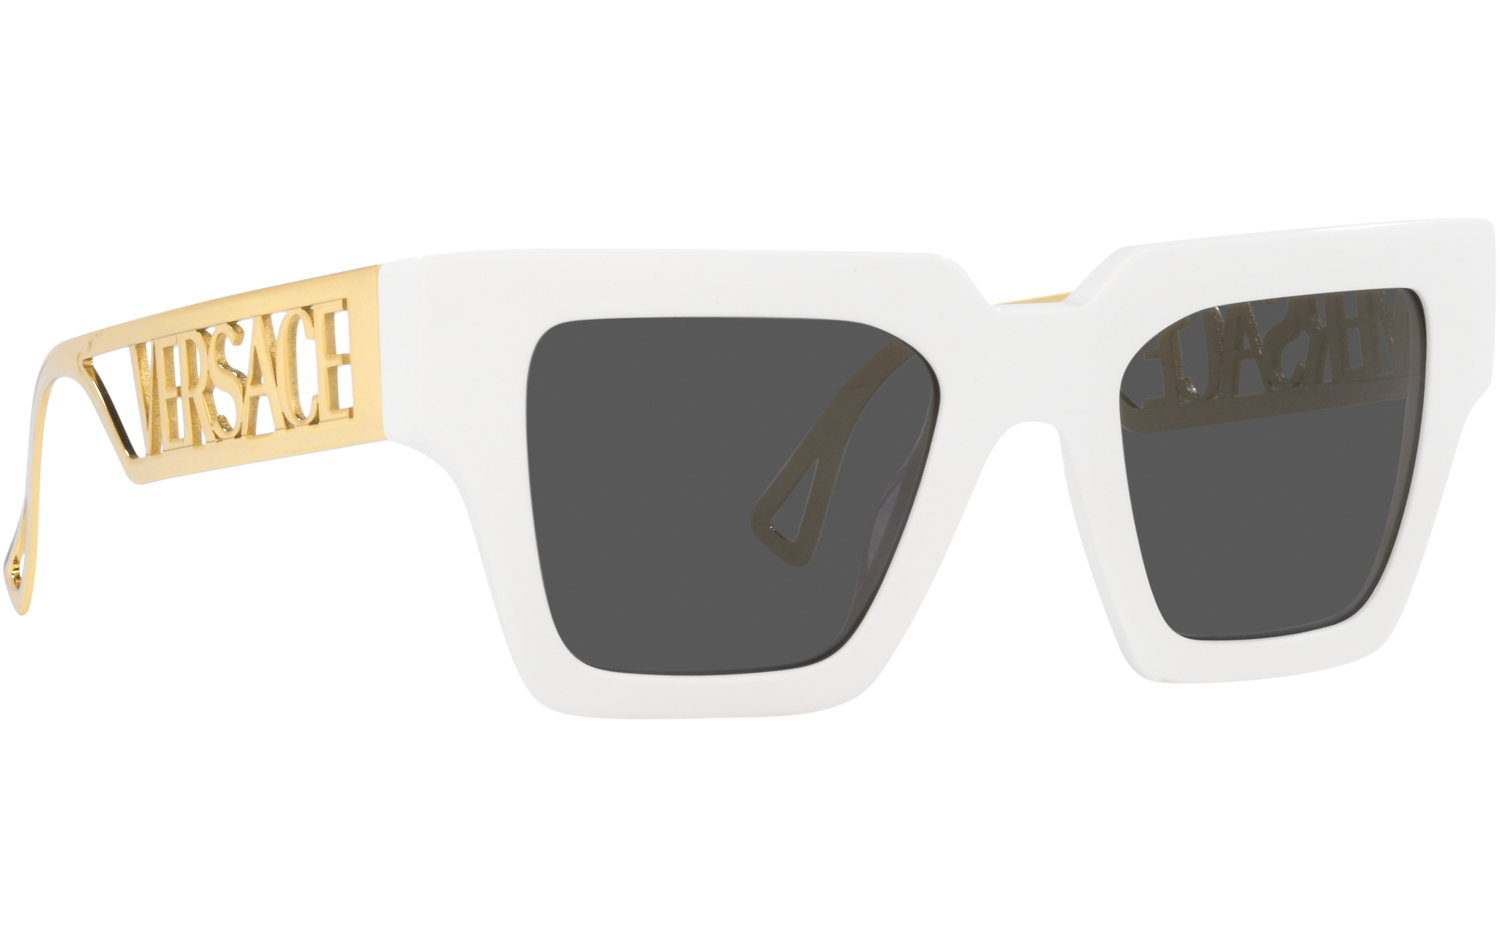 Sunglasses Woman Versace VE 4431 401/87 - price: €155.00